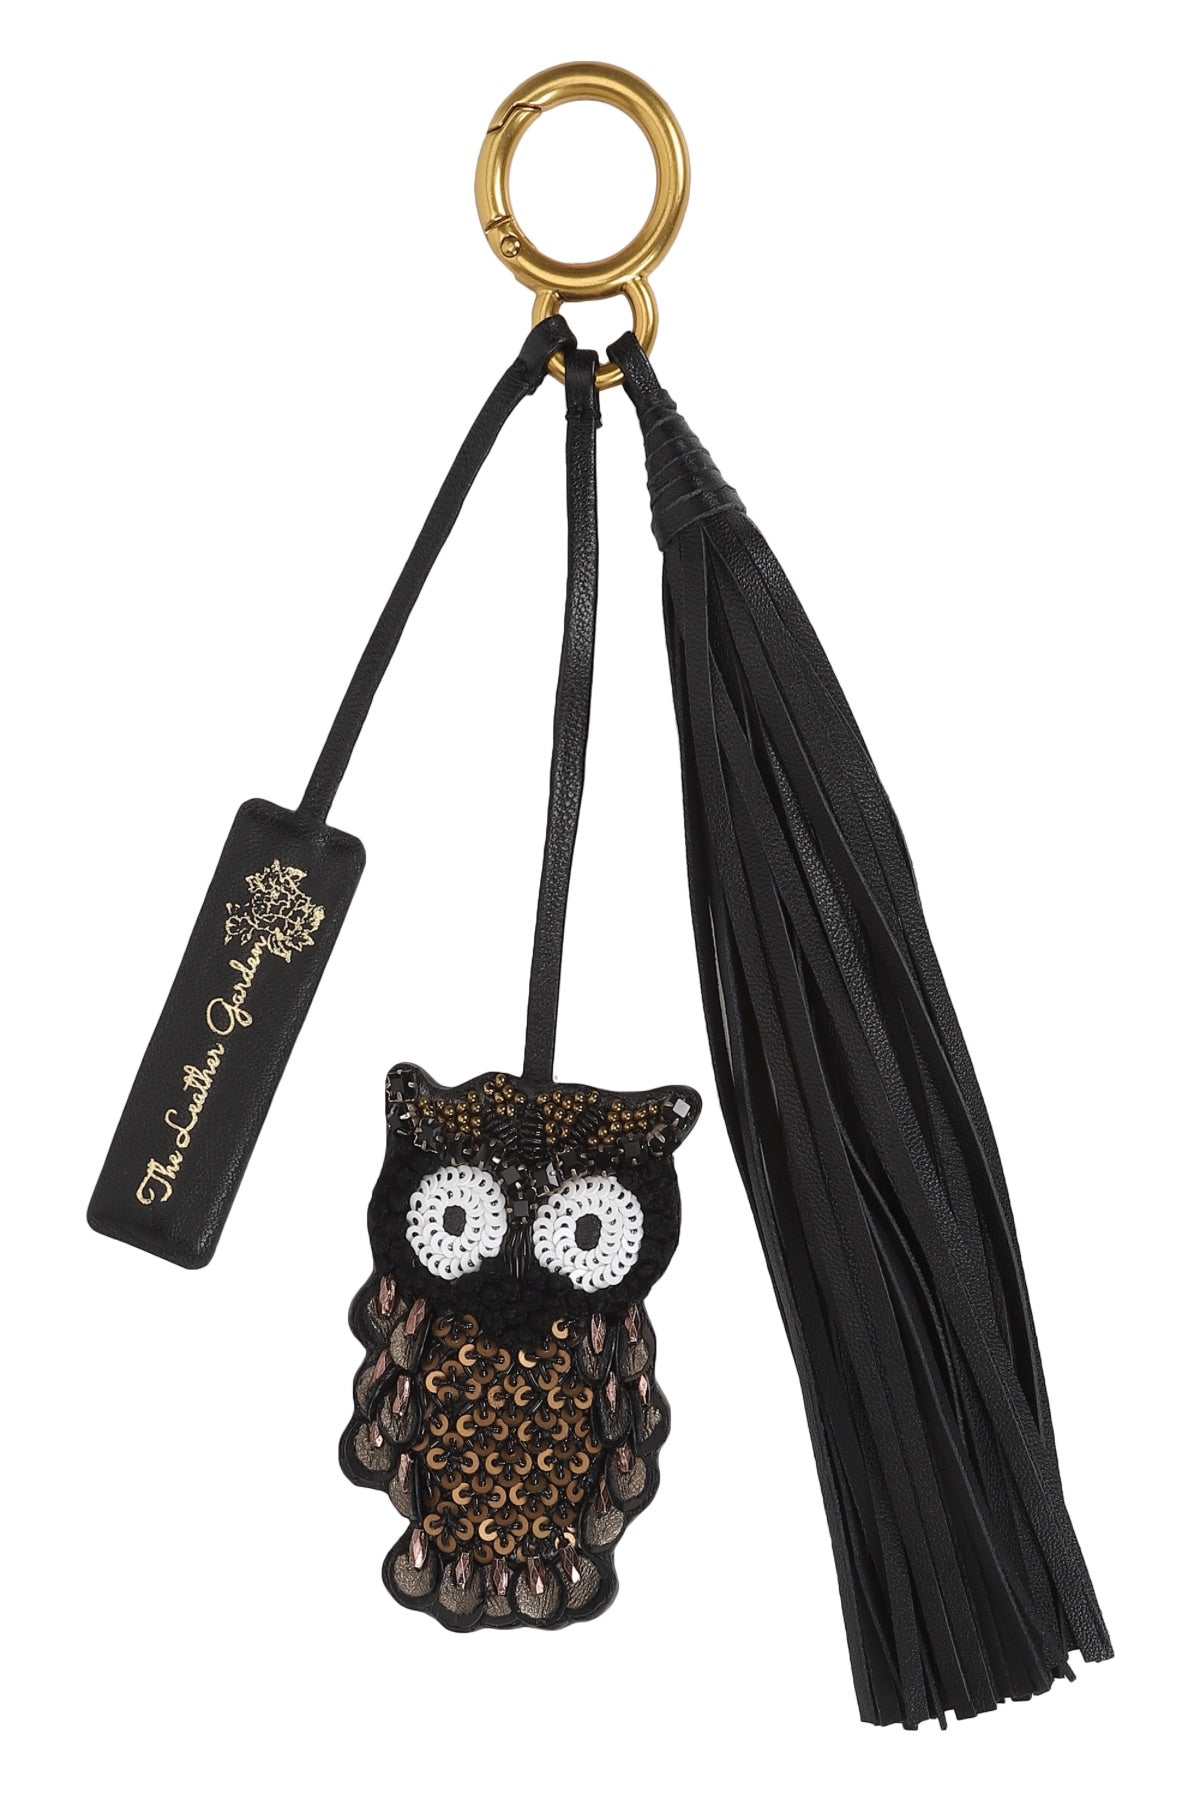 Owl Leather Charm - Black